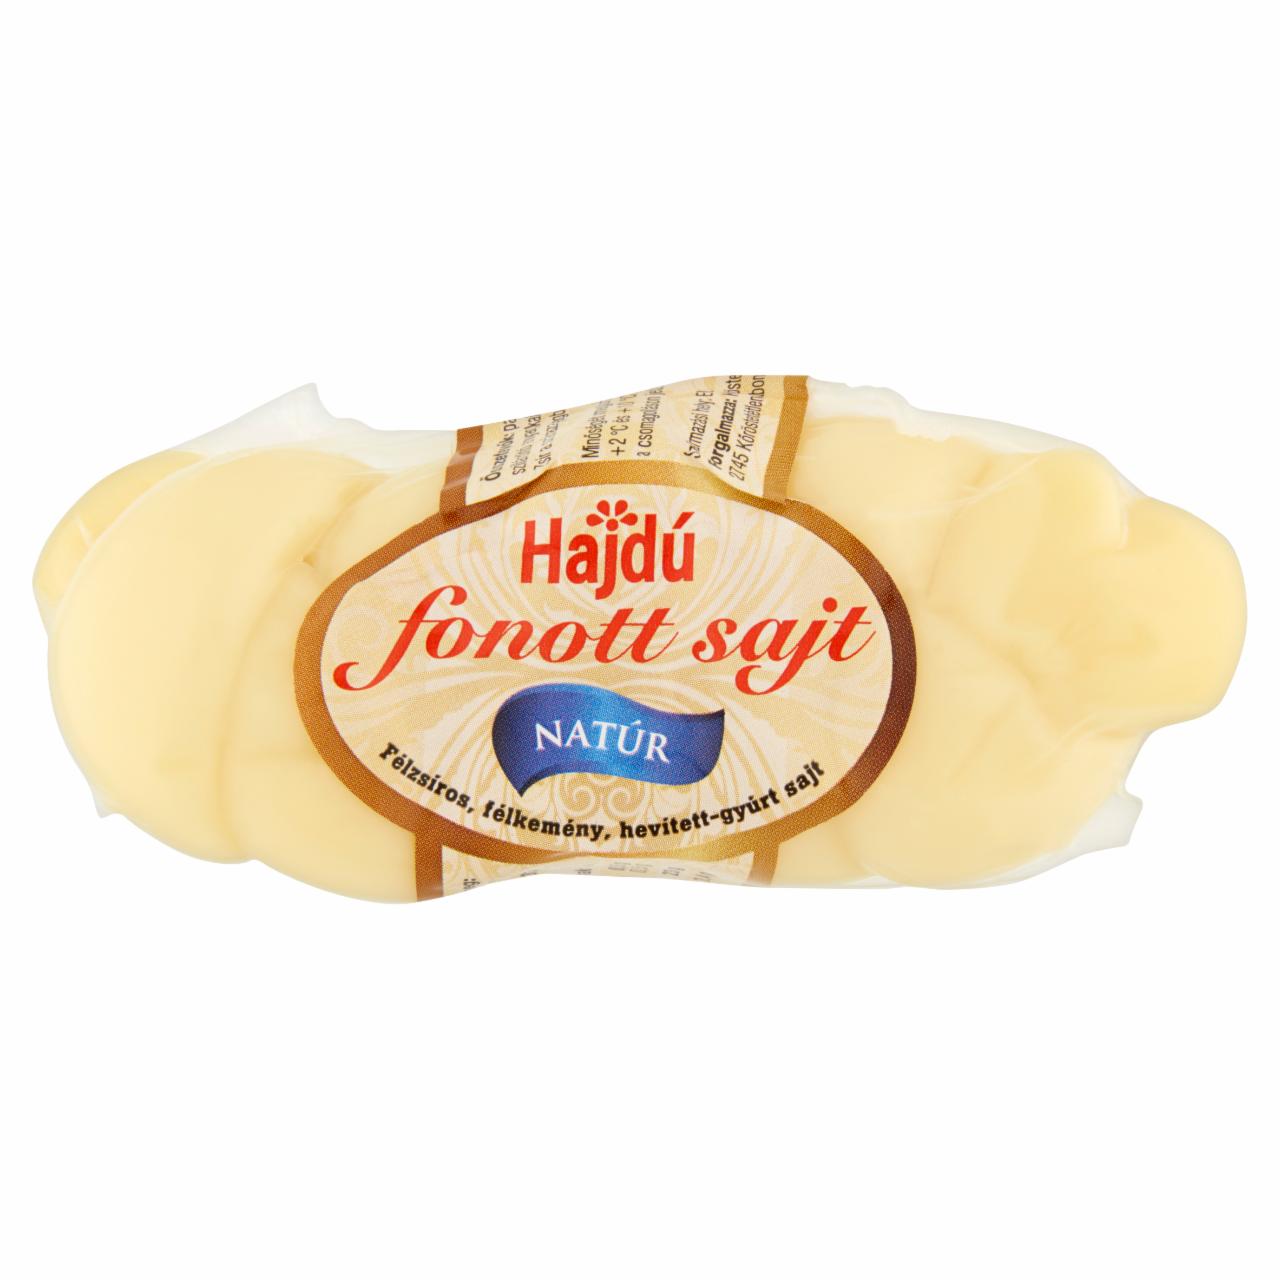 Képek - Hajdú natúr fonott sajt 100 g